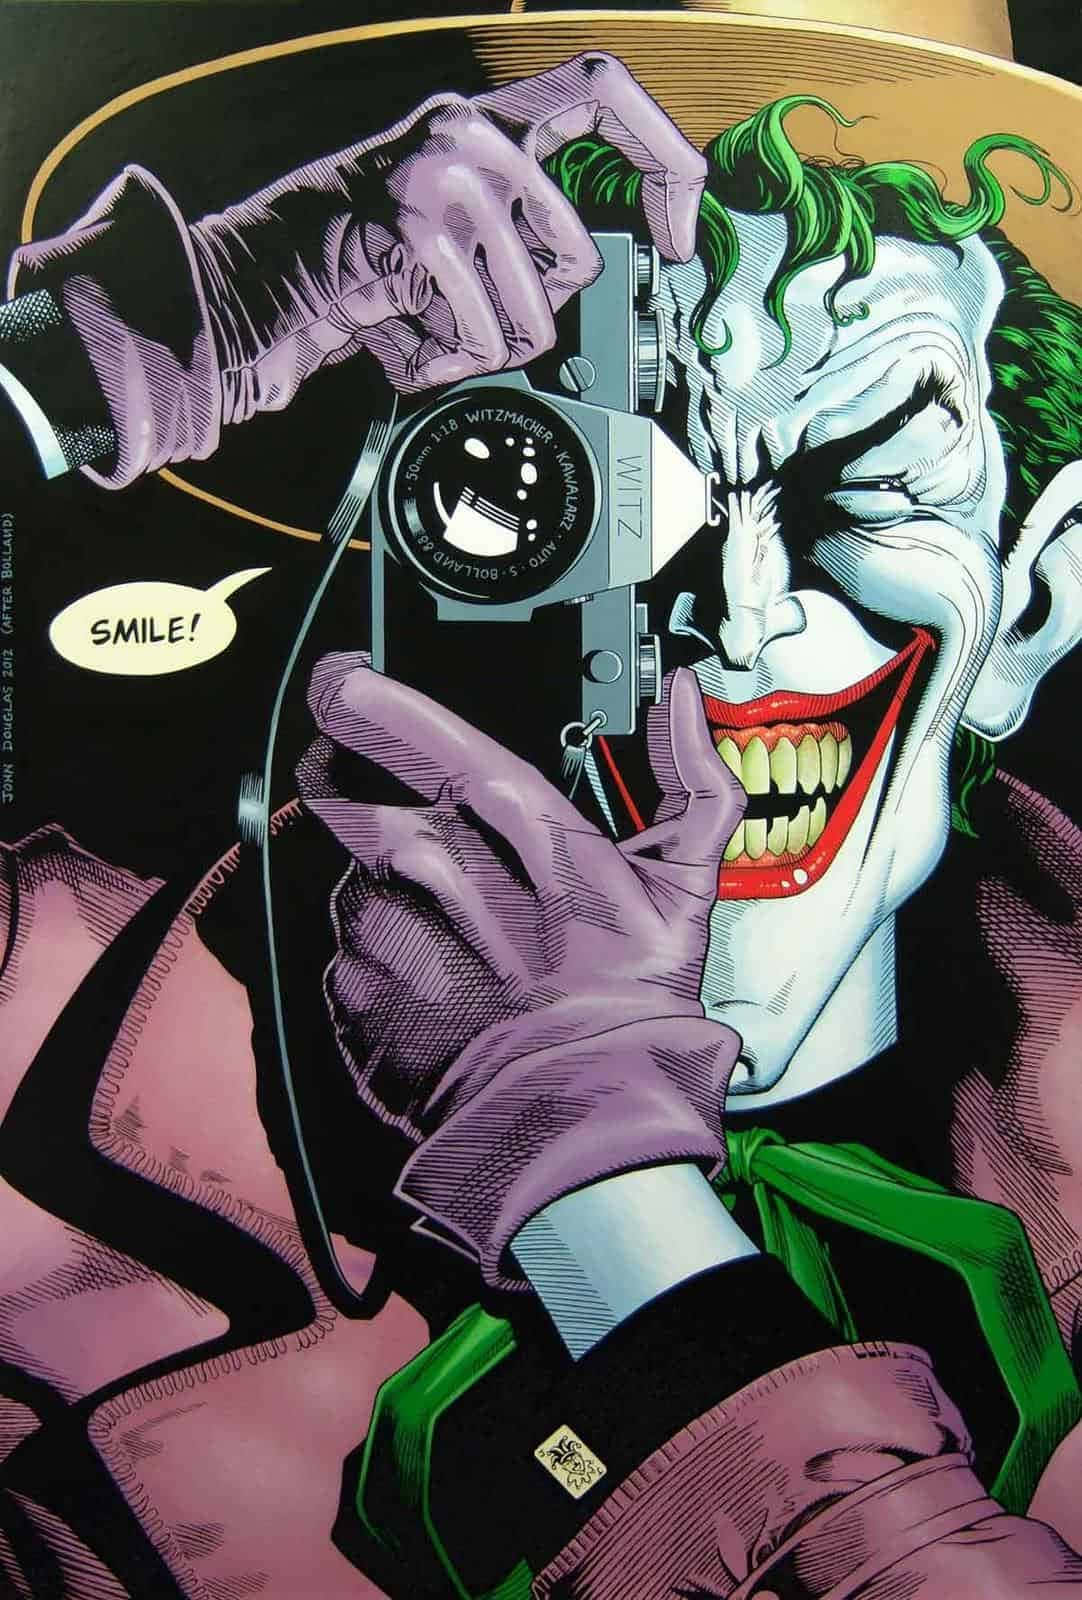 The Dark Knight confronts The Joker in a pivotal scene from Batman: The Killing Joke. Wallpaper